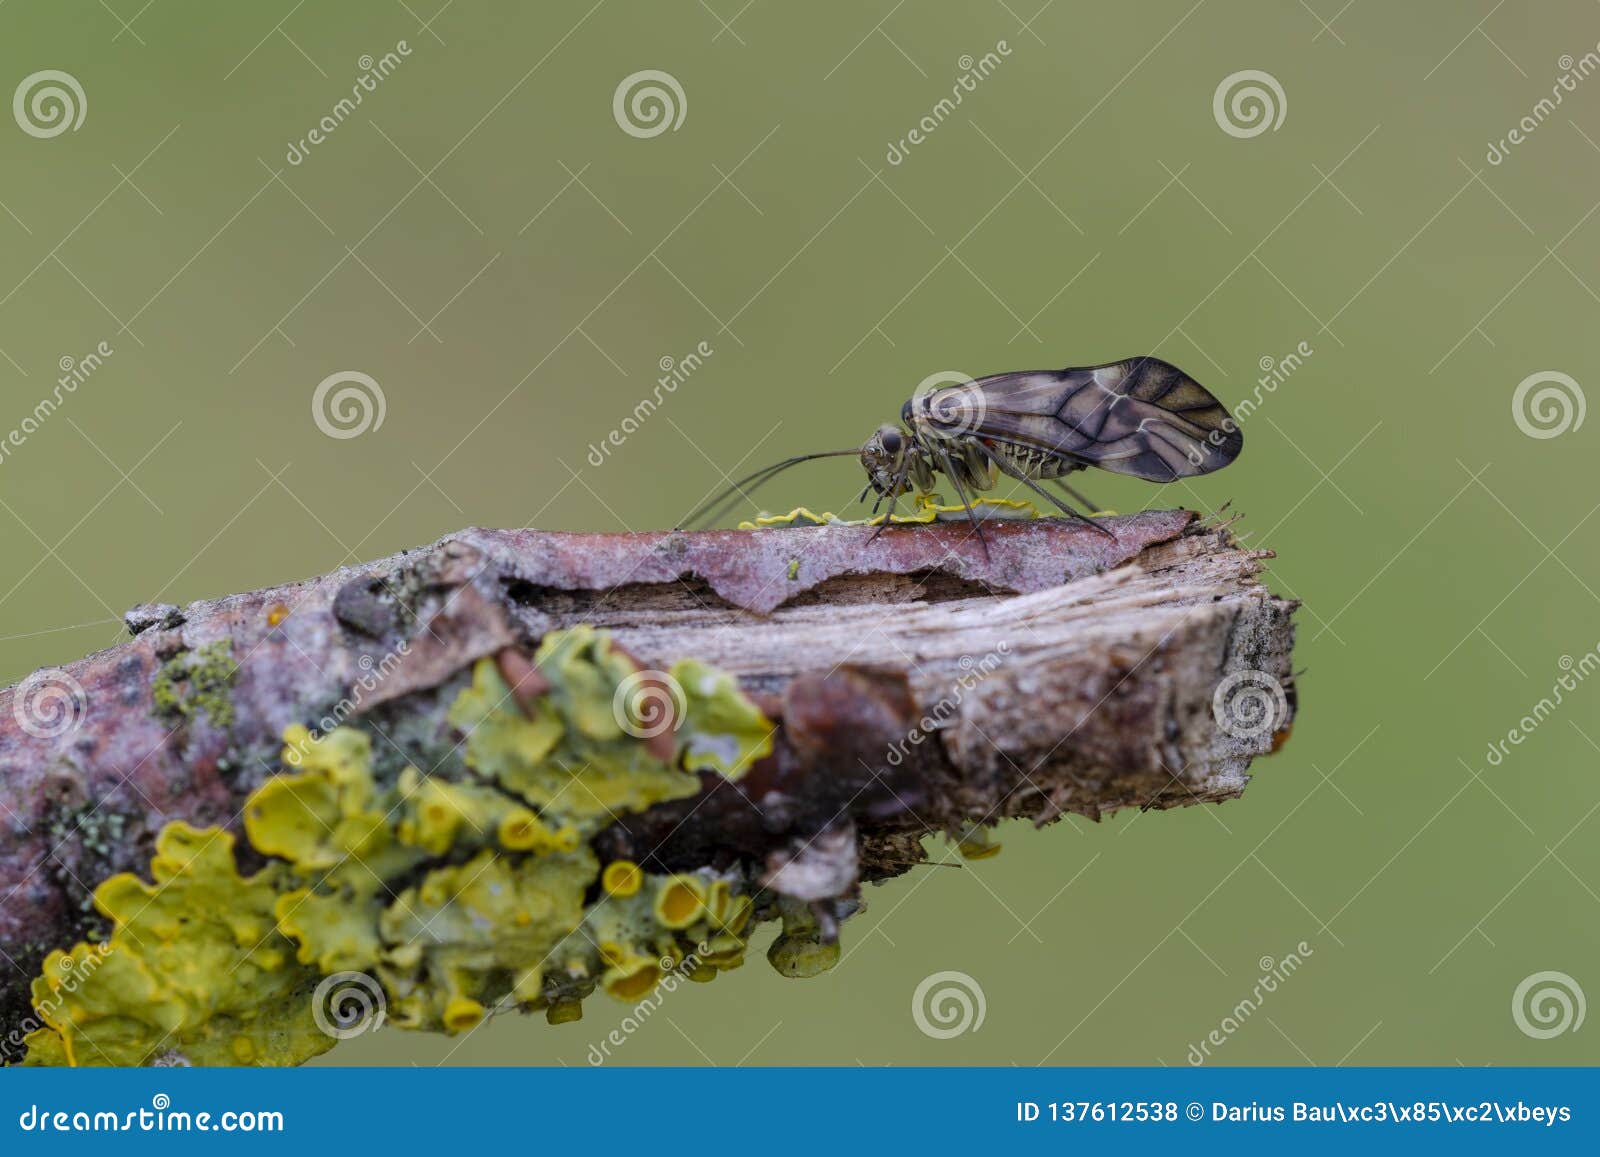 common barklice sitting on twig